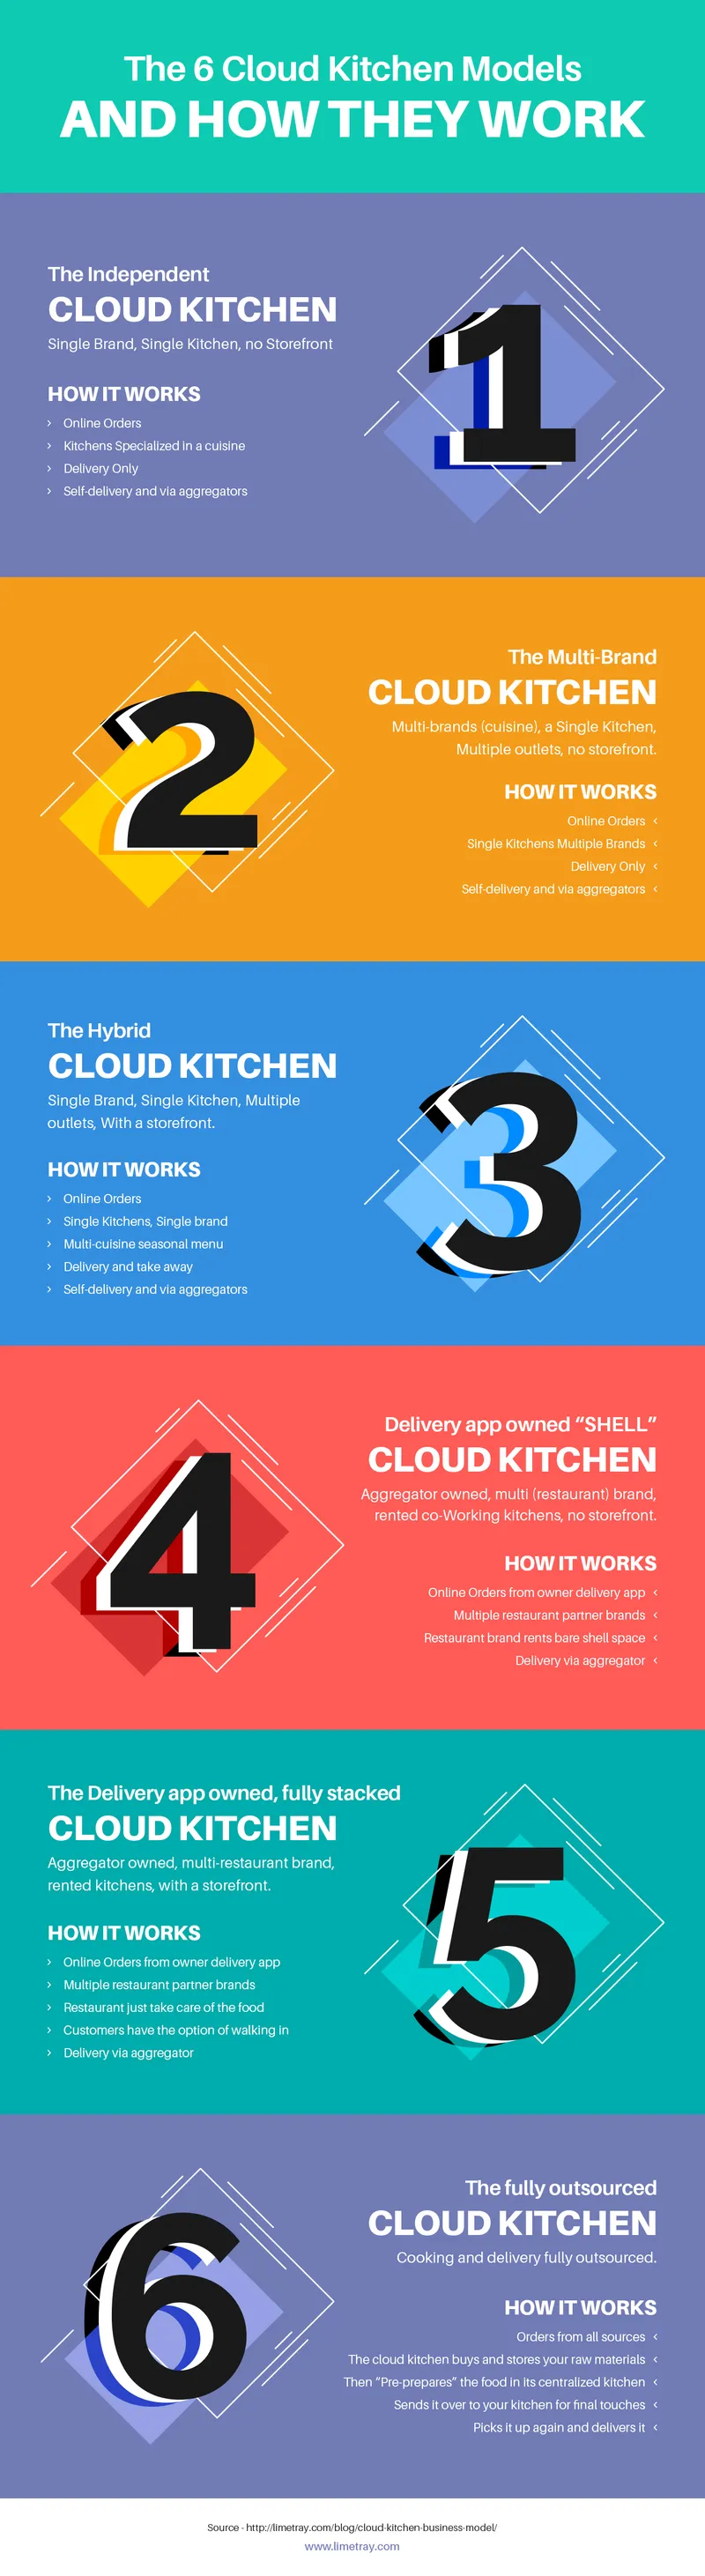 Business models for cloud kitchen